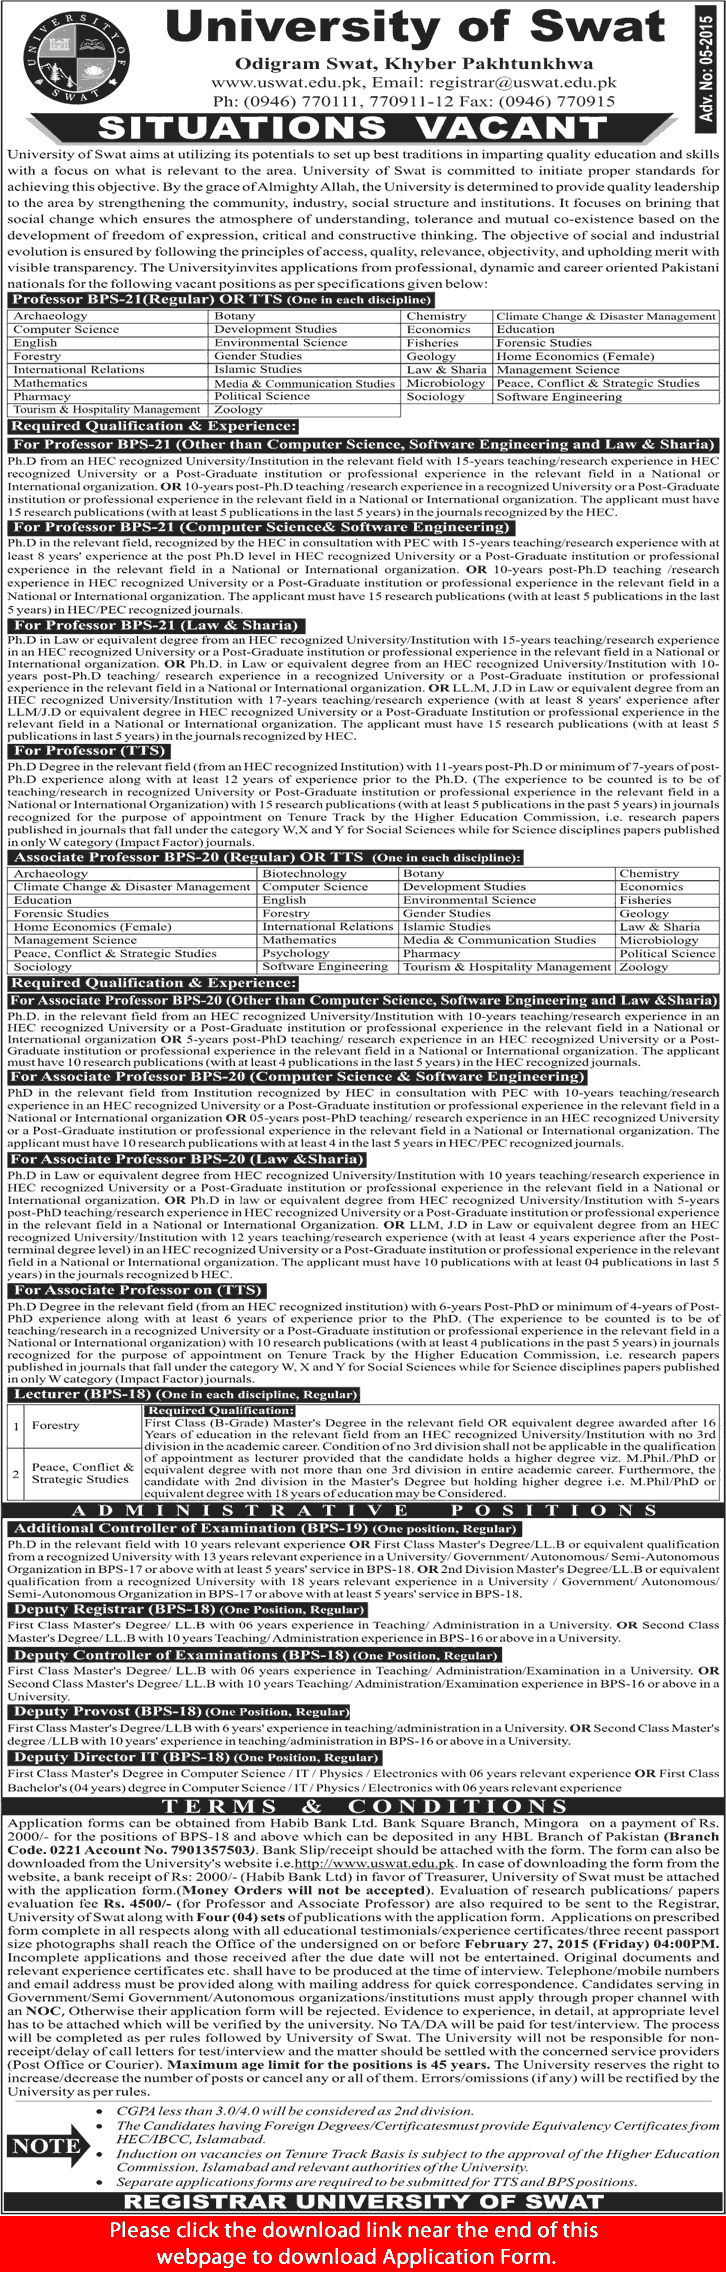 University of Swat Jobs 2015 February Application Form Teaching & Admin Staff Latest